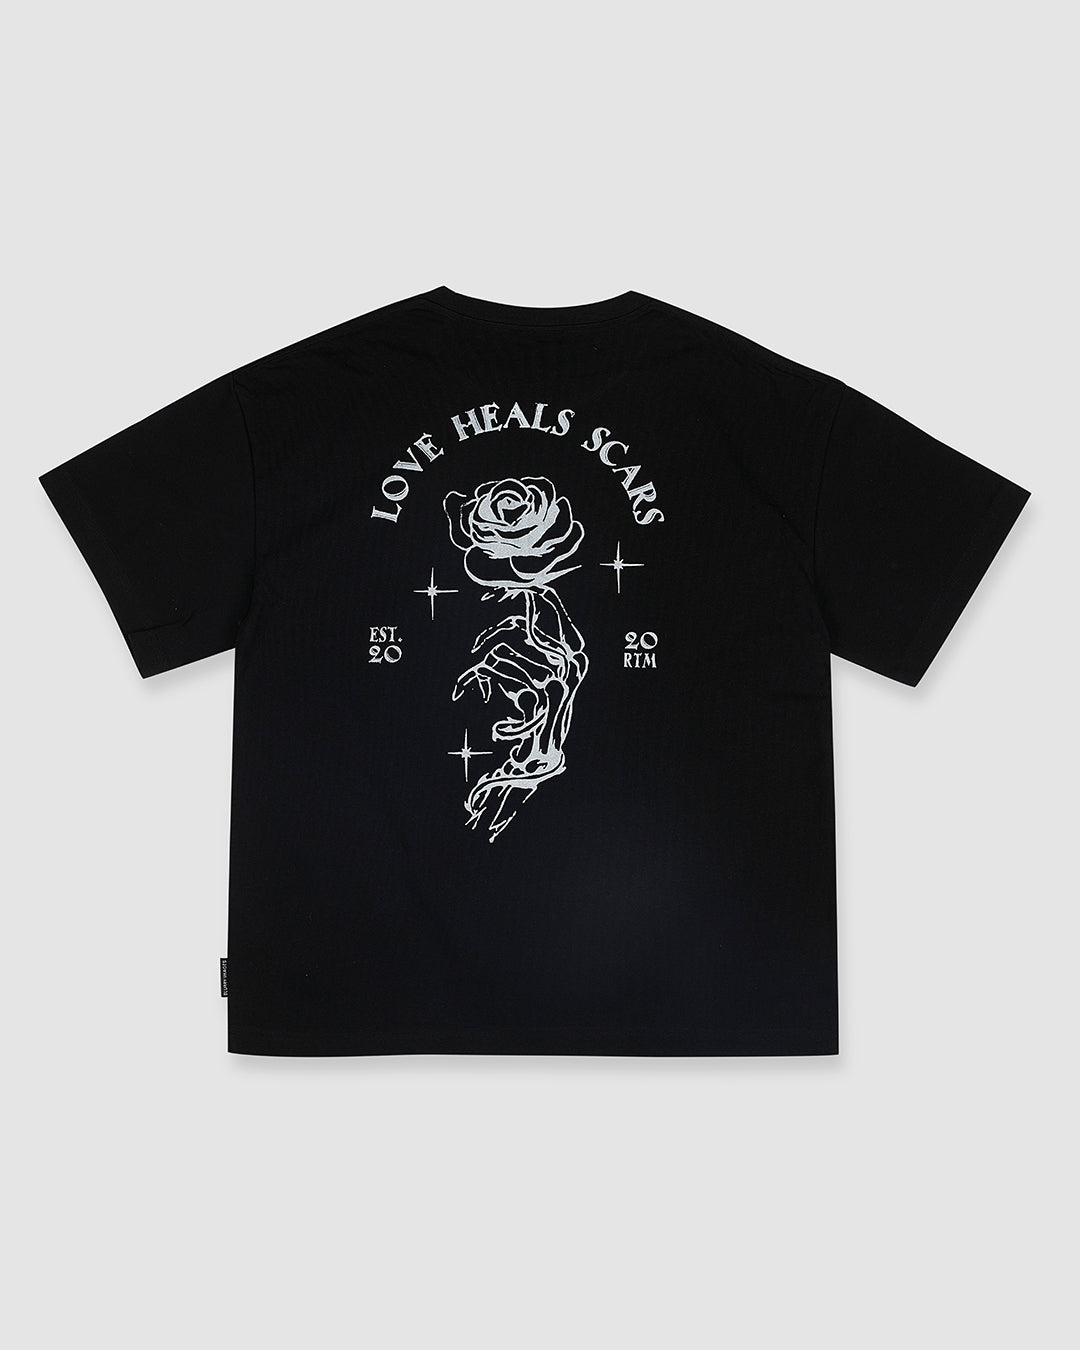 Blurry 'Love Heals Scars' T-Shirt (Black/Pearl White)